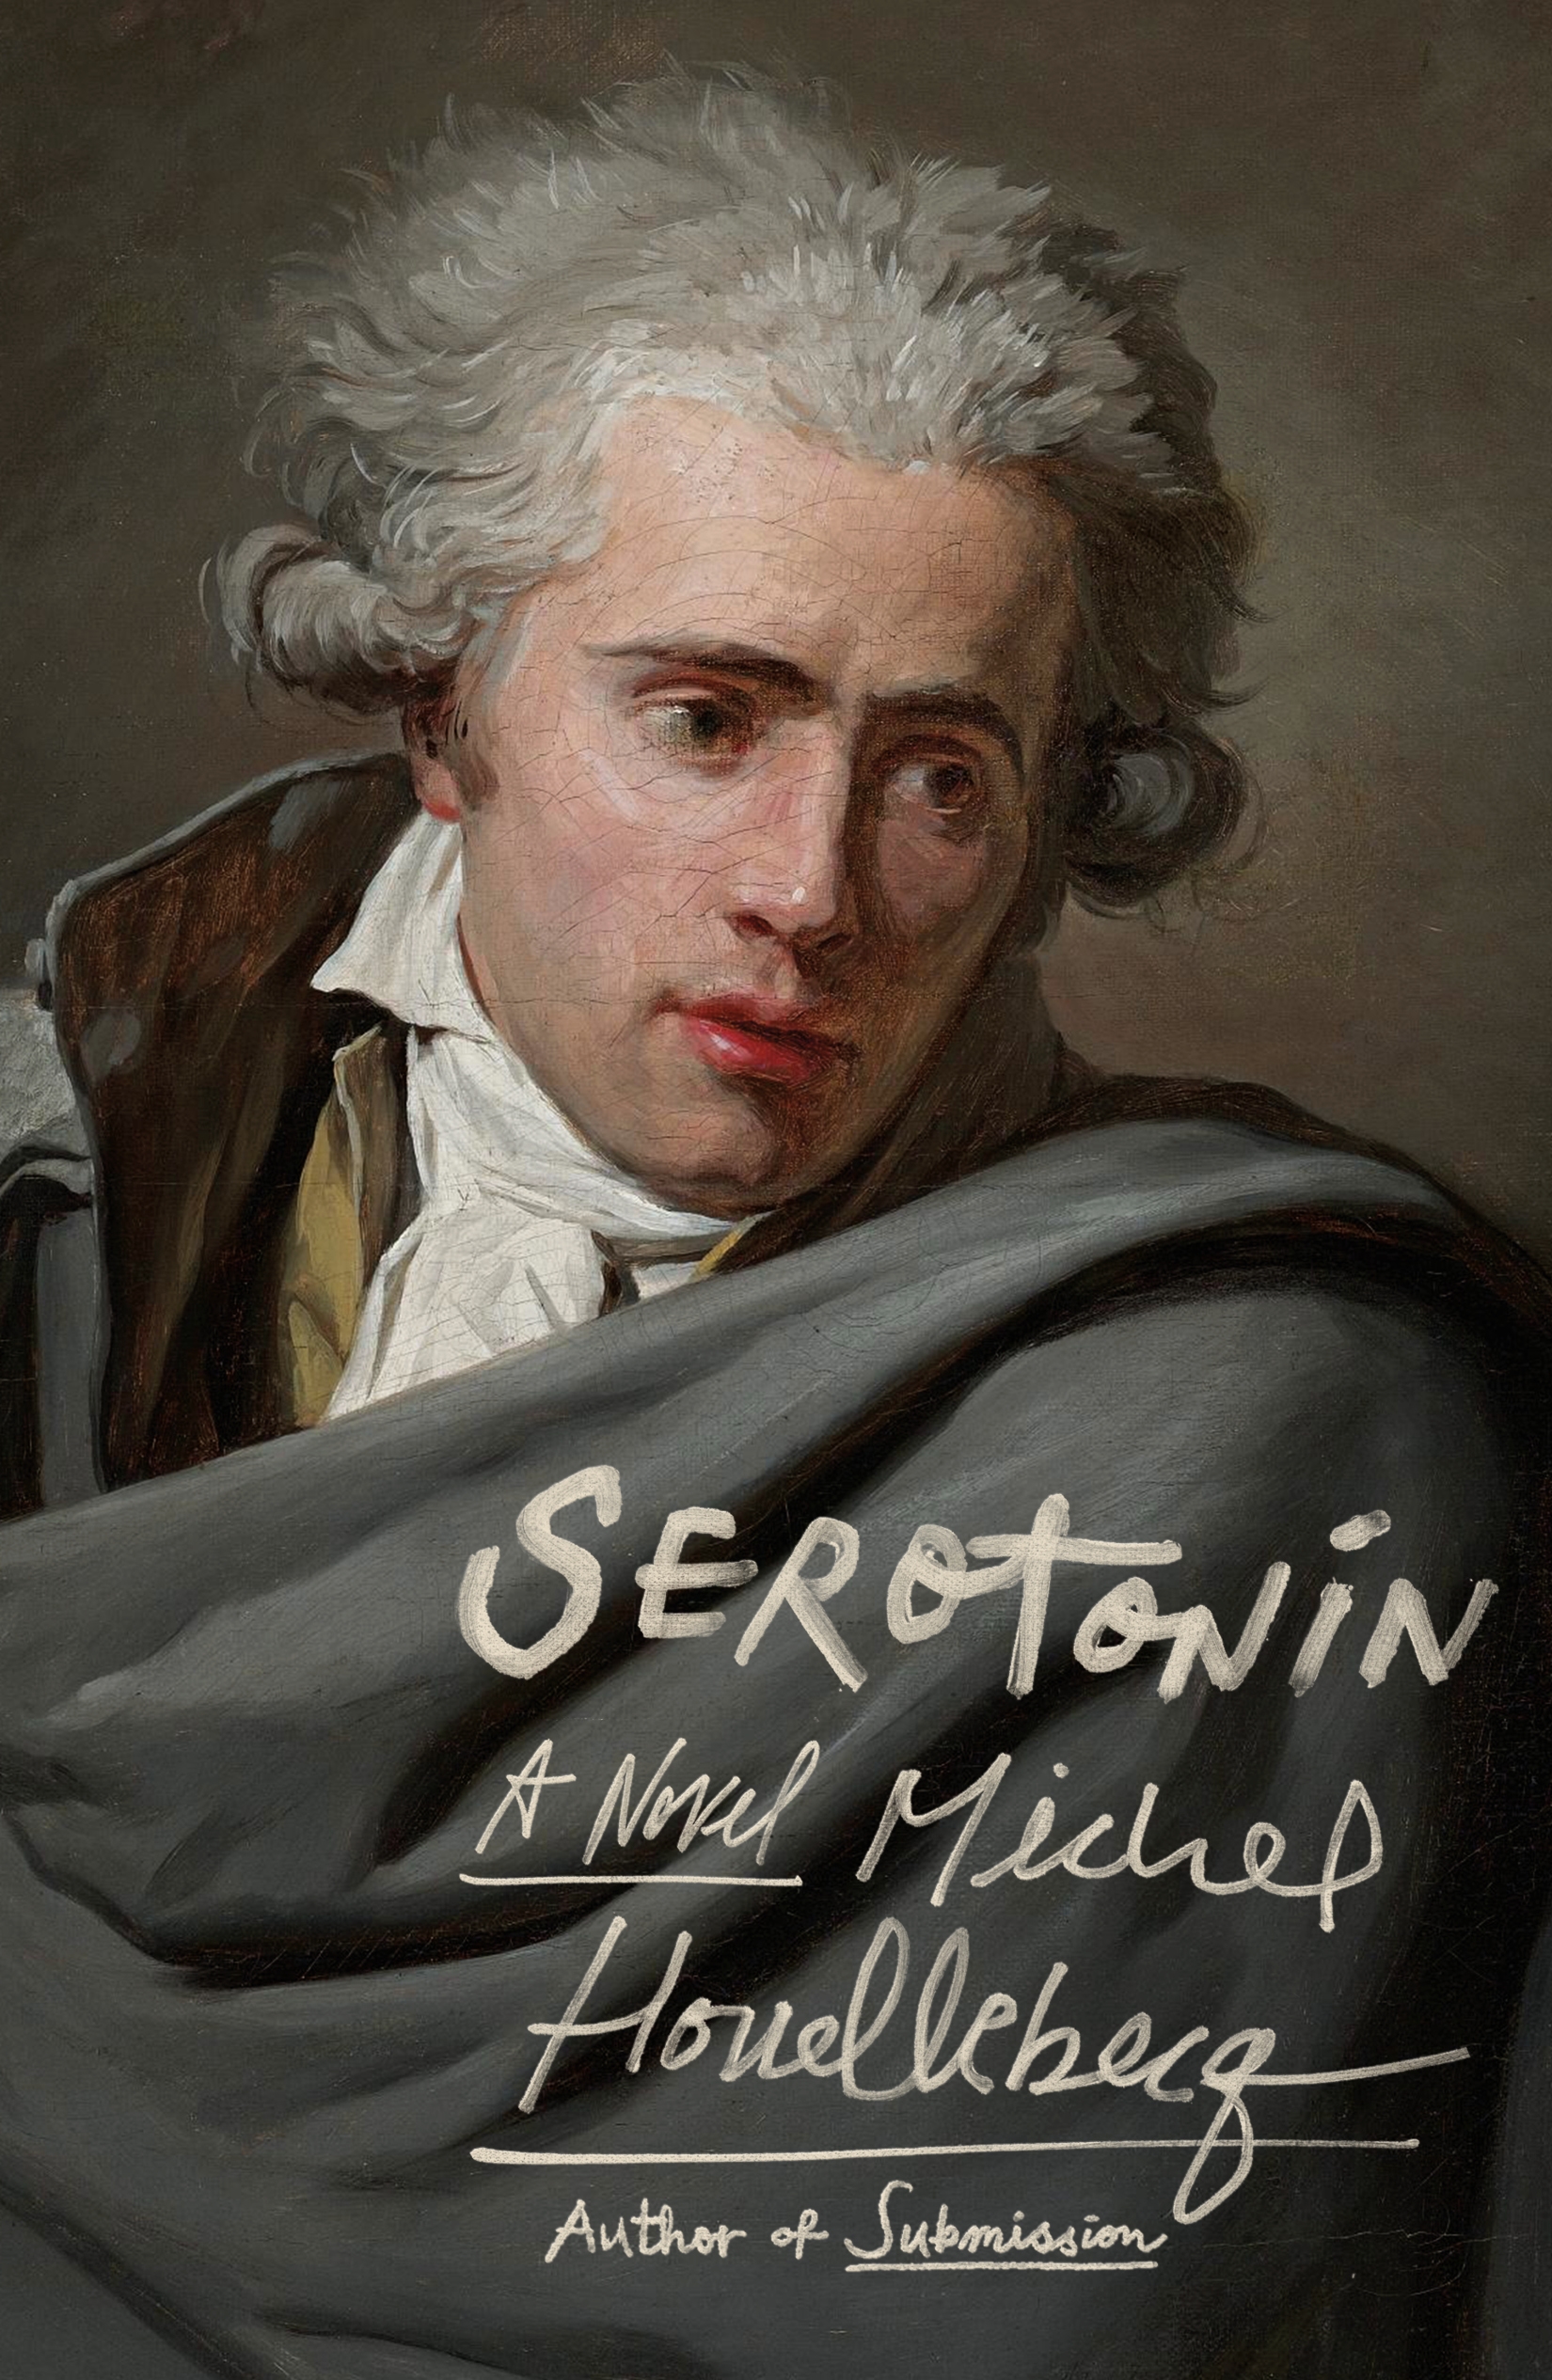 Book “Serotonin” by Michel Houellebecq